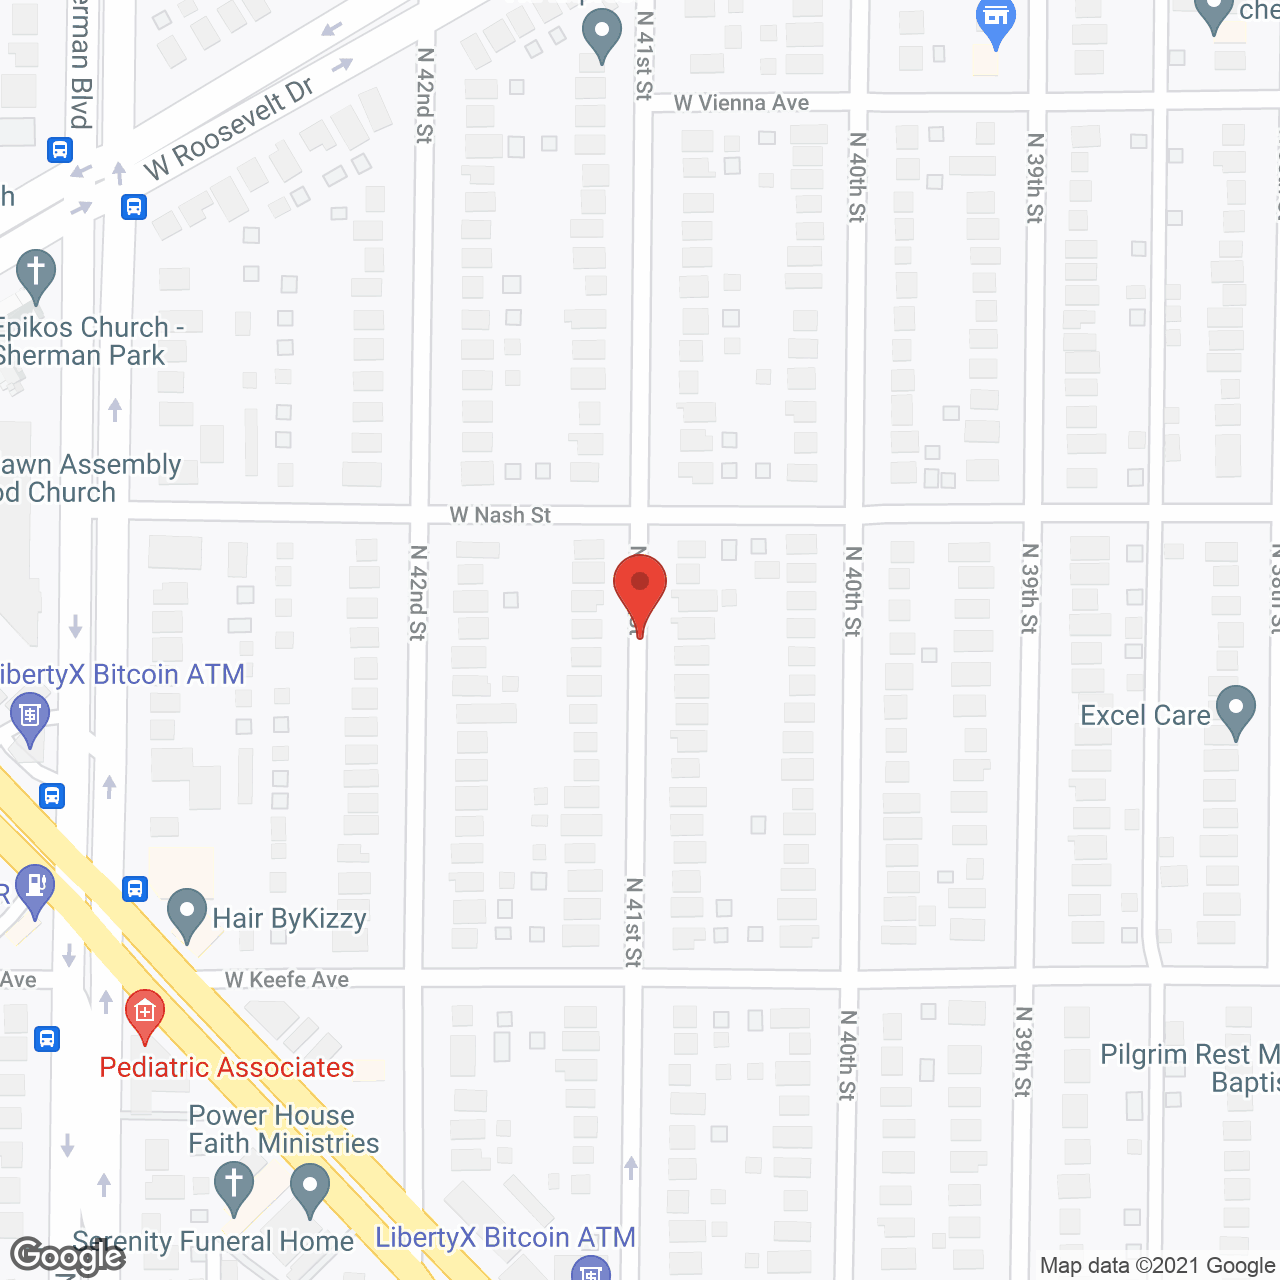 Graceful Living Center Inc in google map